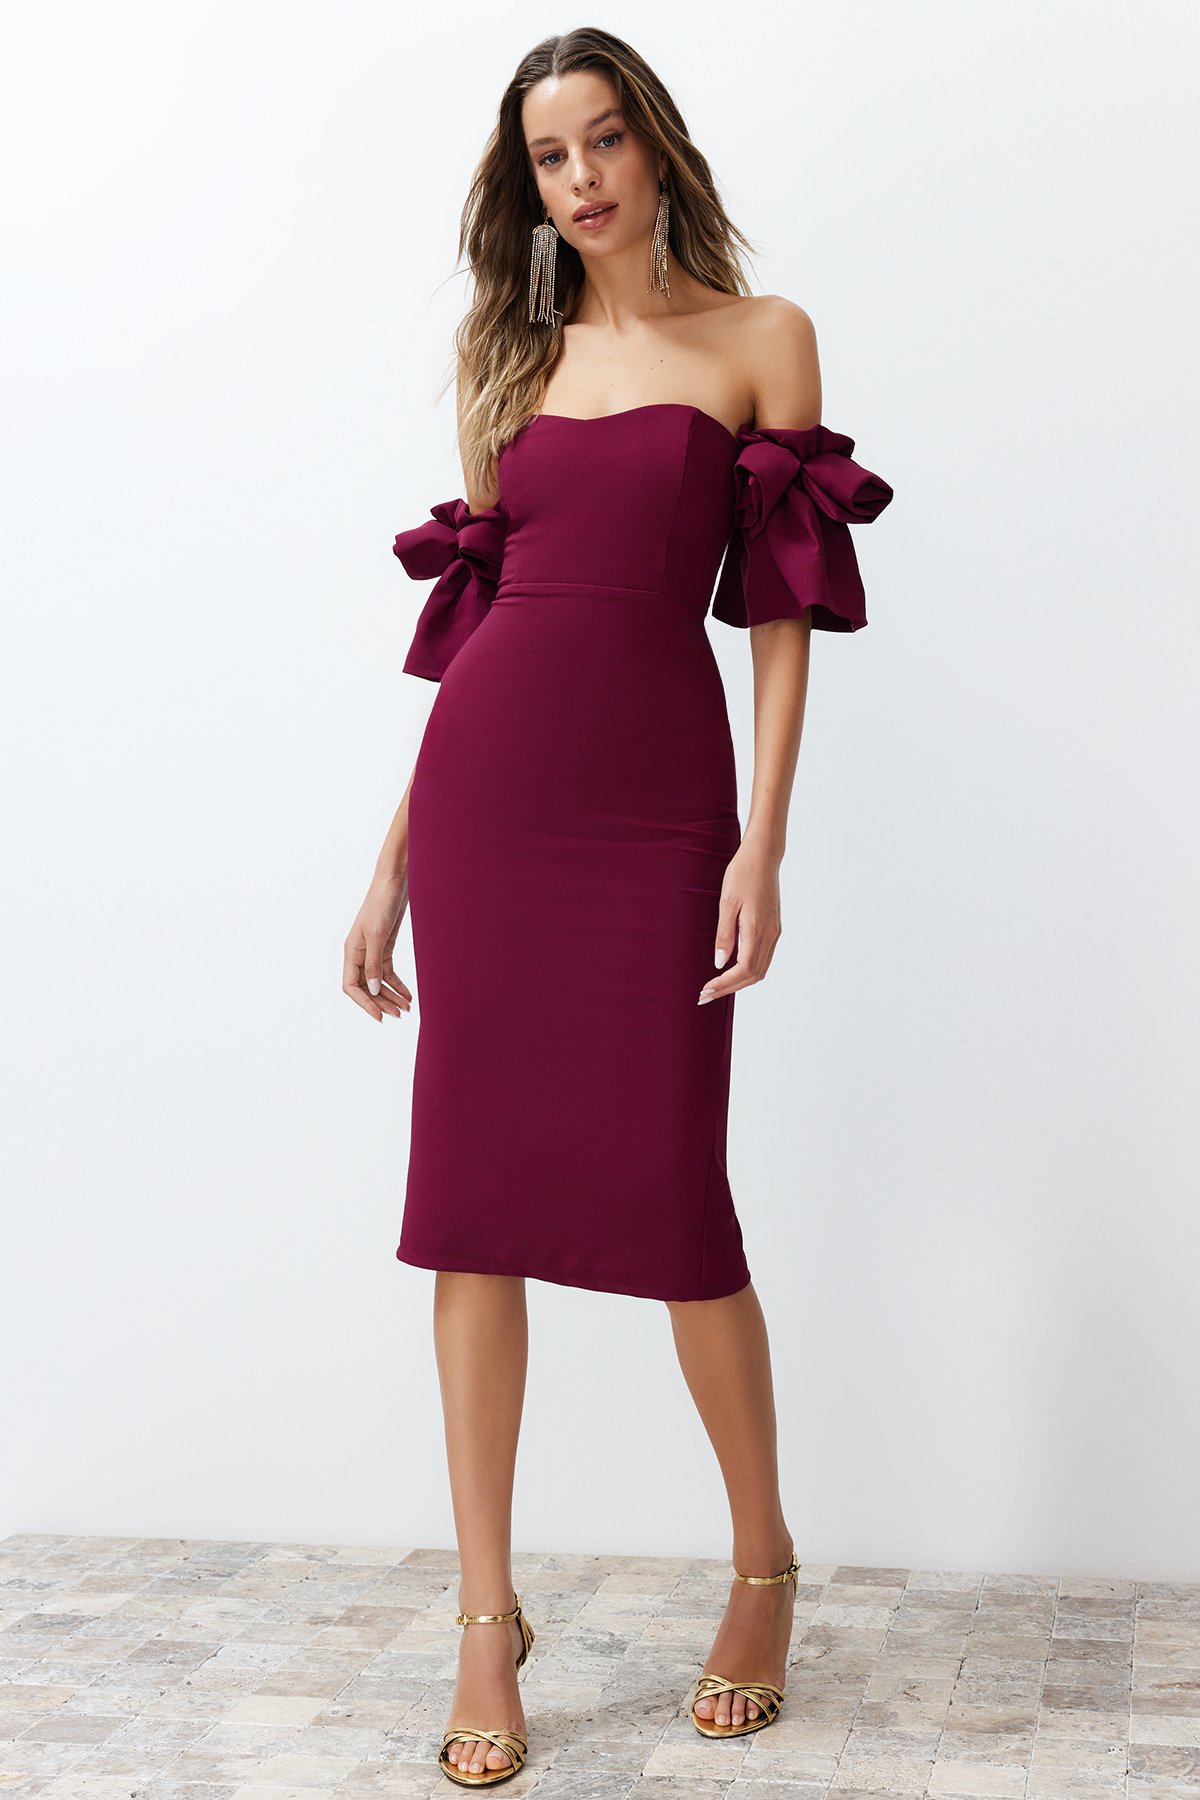 Trendyol Purple Rose Accessory Elegant Evening Dress